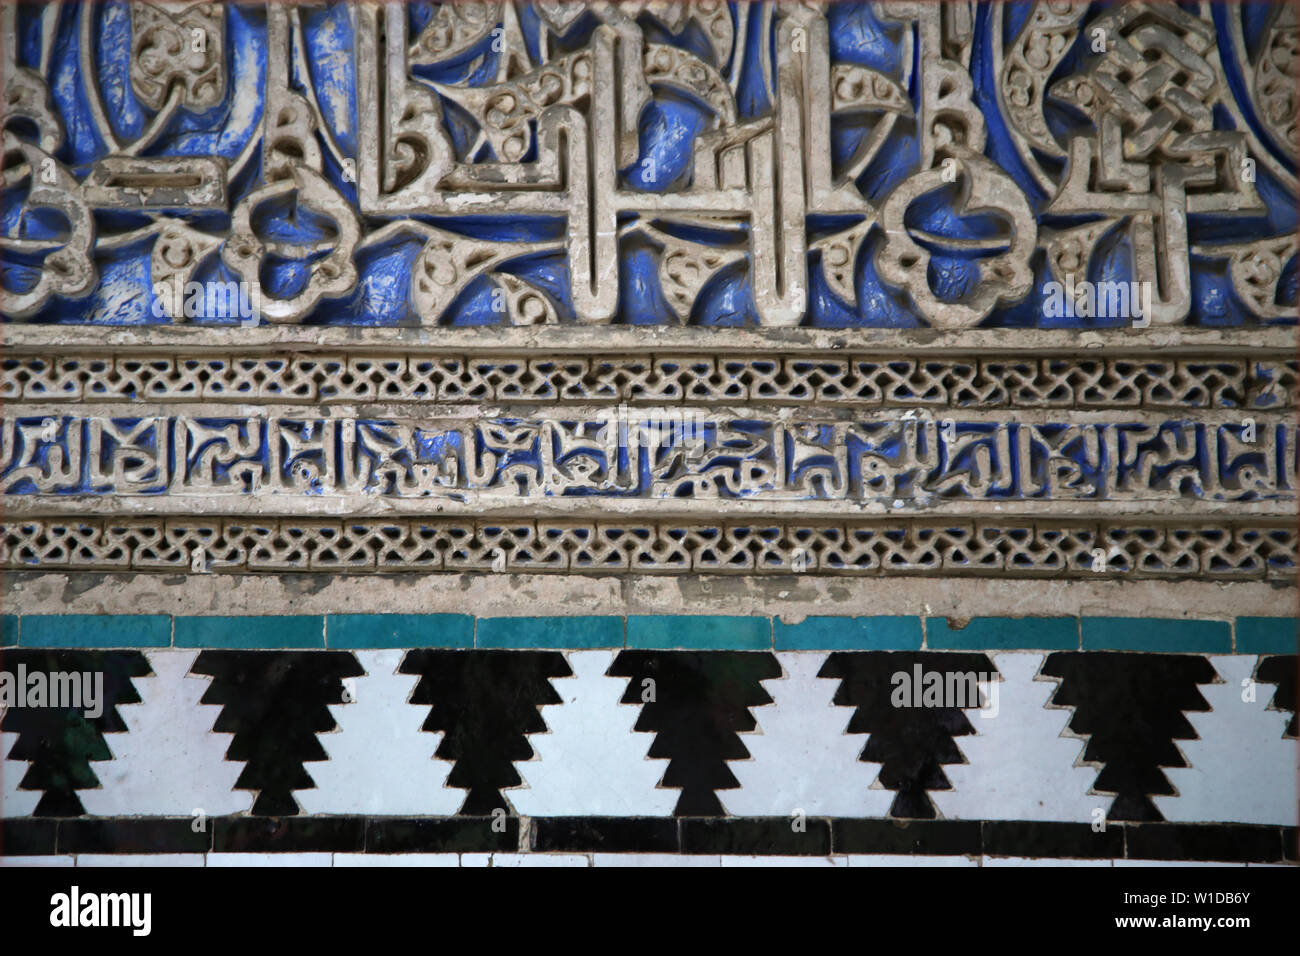 Spain. Seville. Royal Alcazar. Geometric patterns on ceramic tiles. Stock Photo